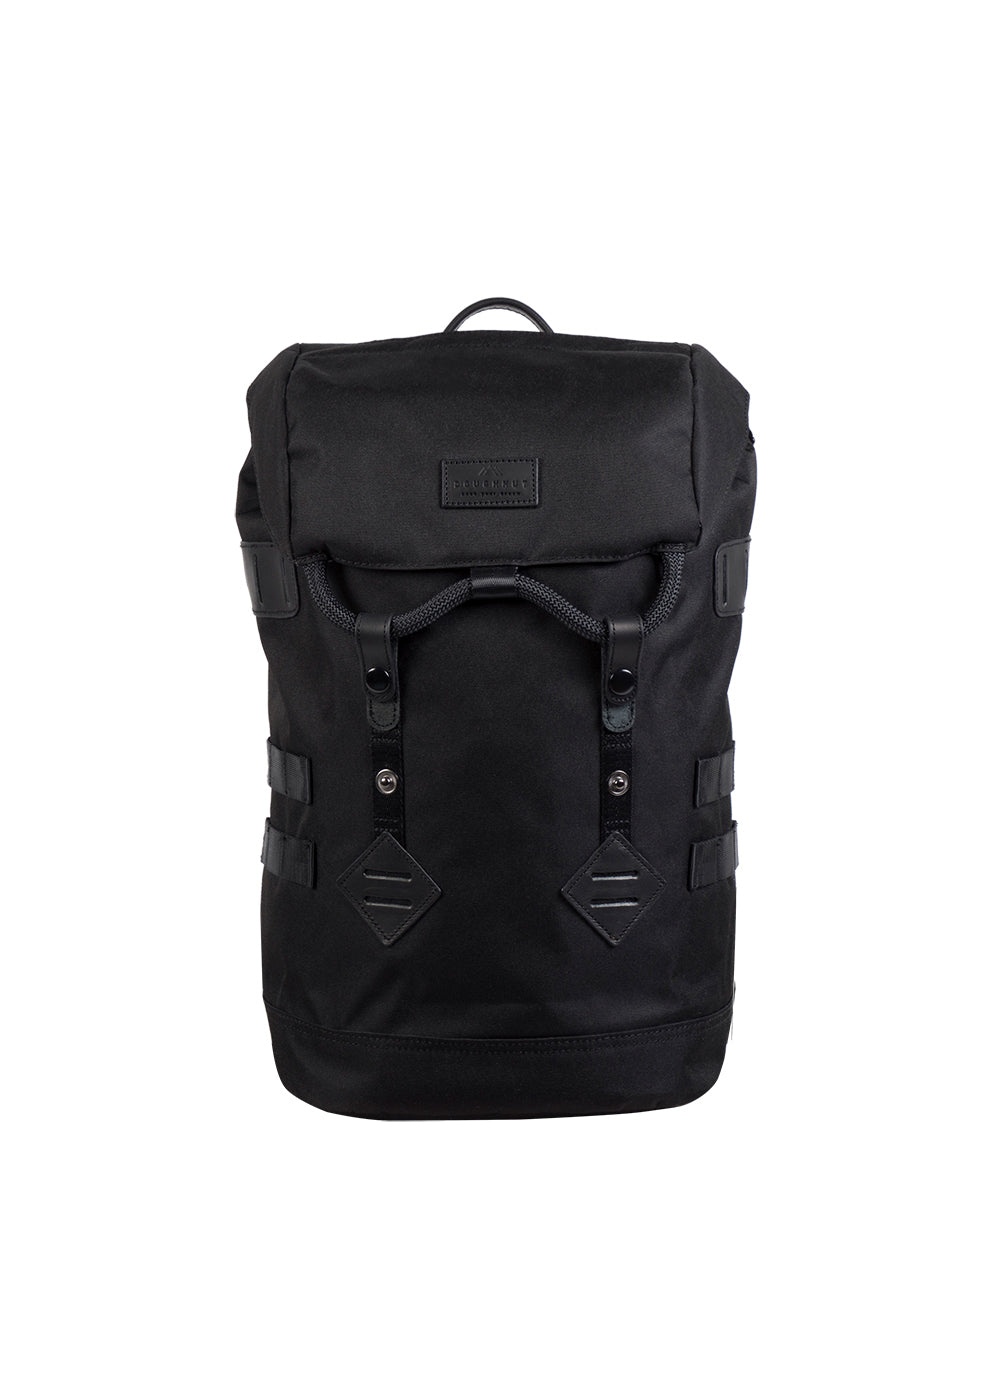 Colorado Small Black Series Backpack